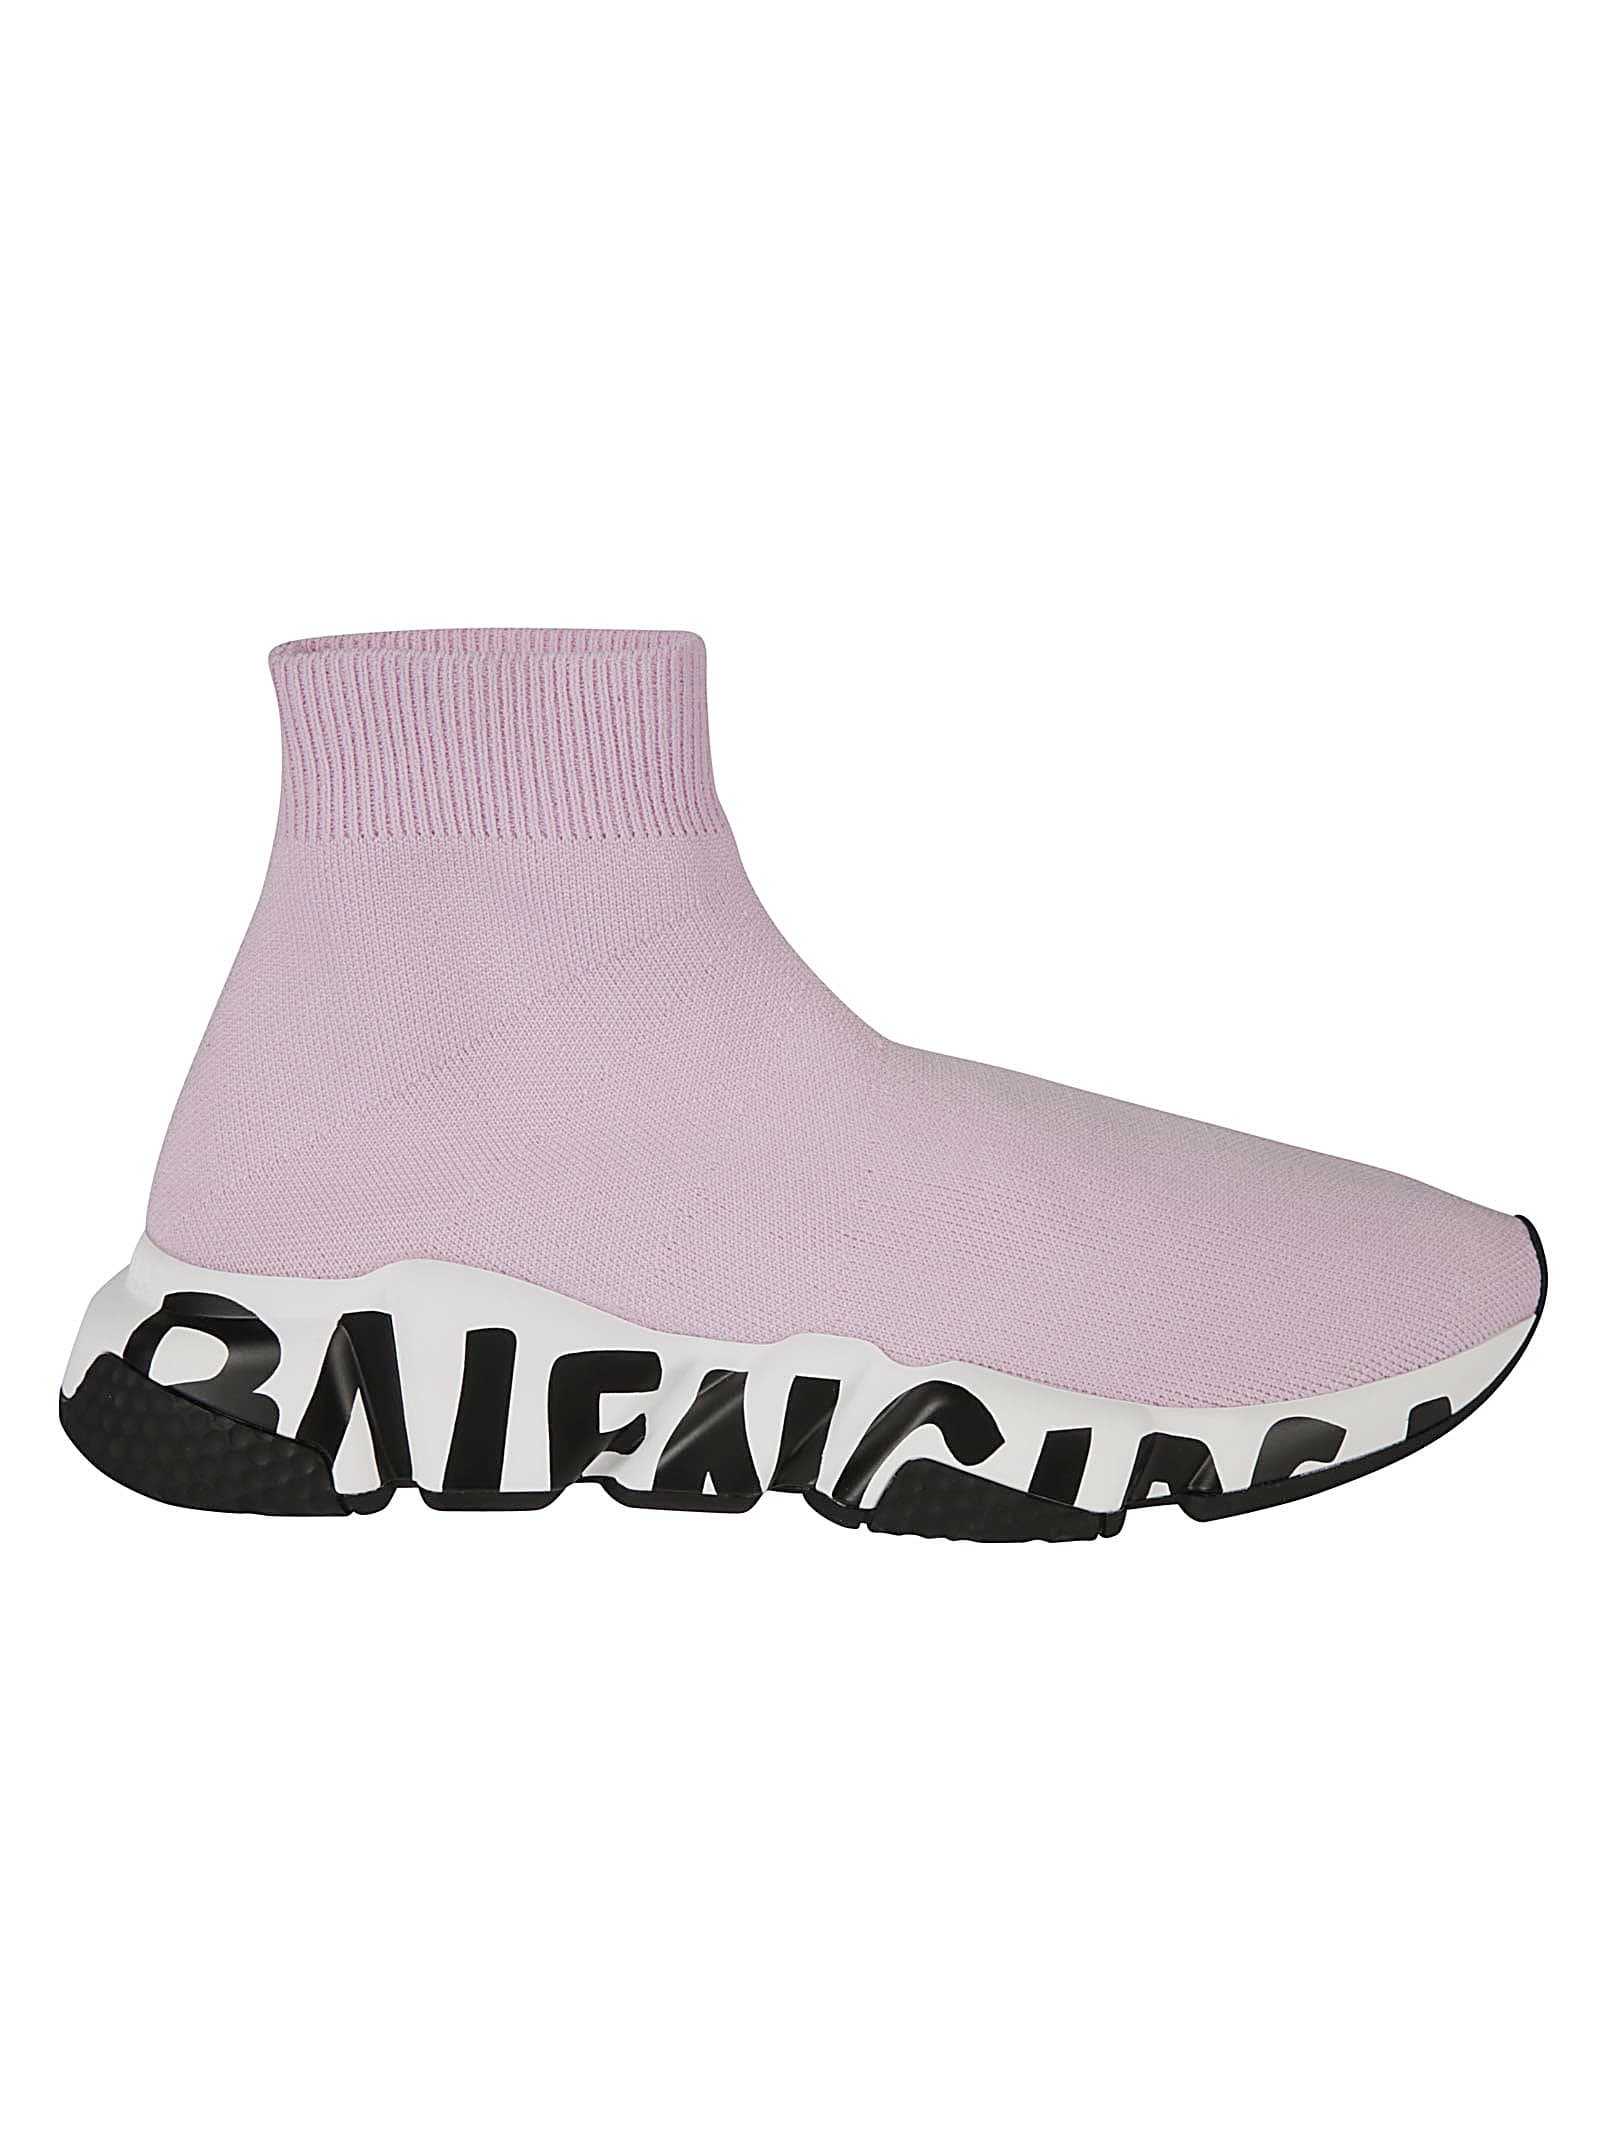 Buy Balenciaga Graffiti Speed Sneakers online, shop Balenciaga shoes with free shipping